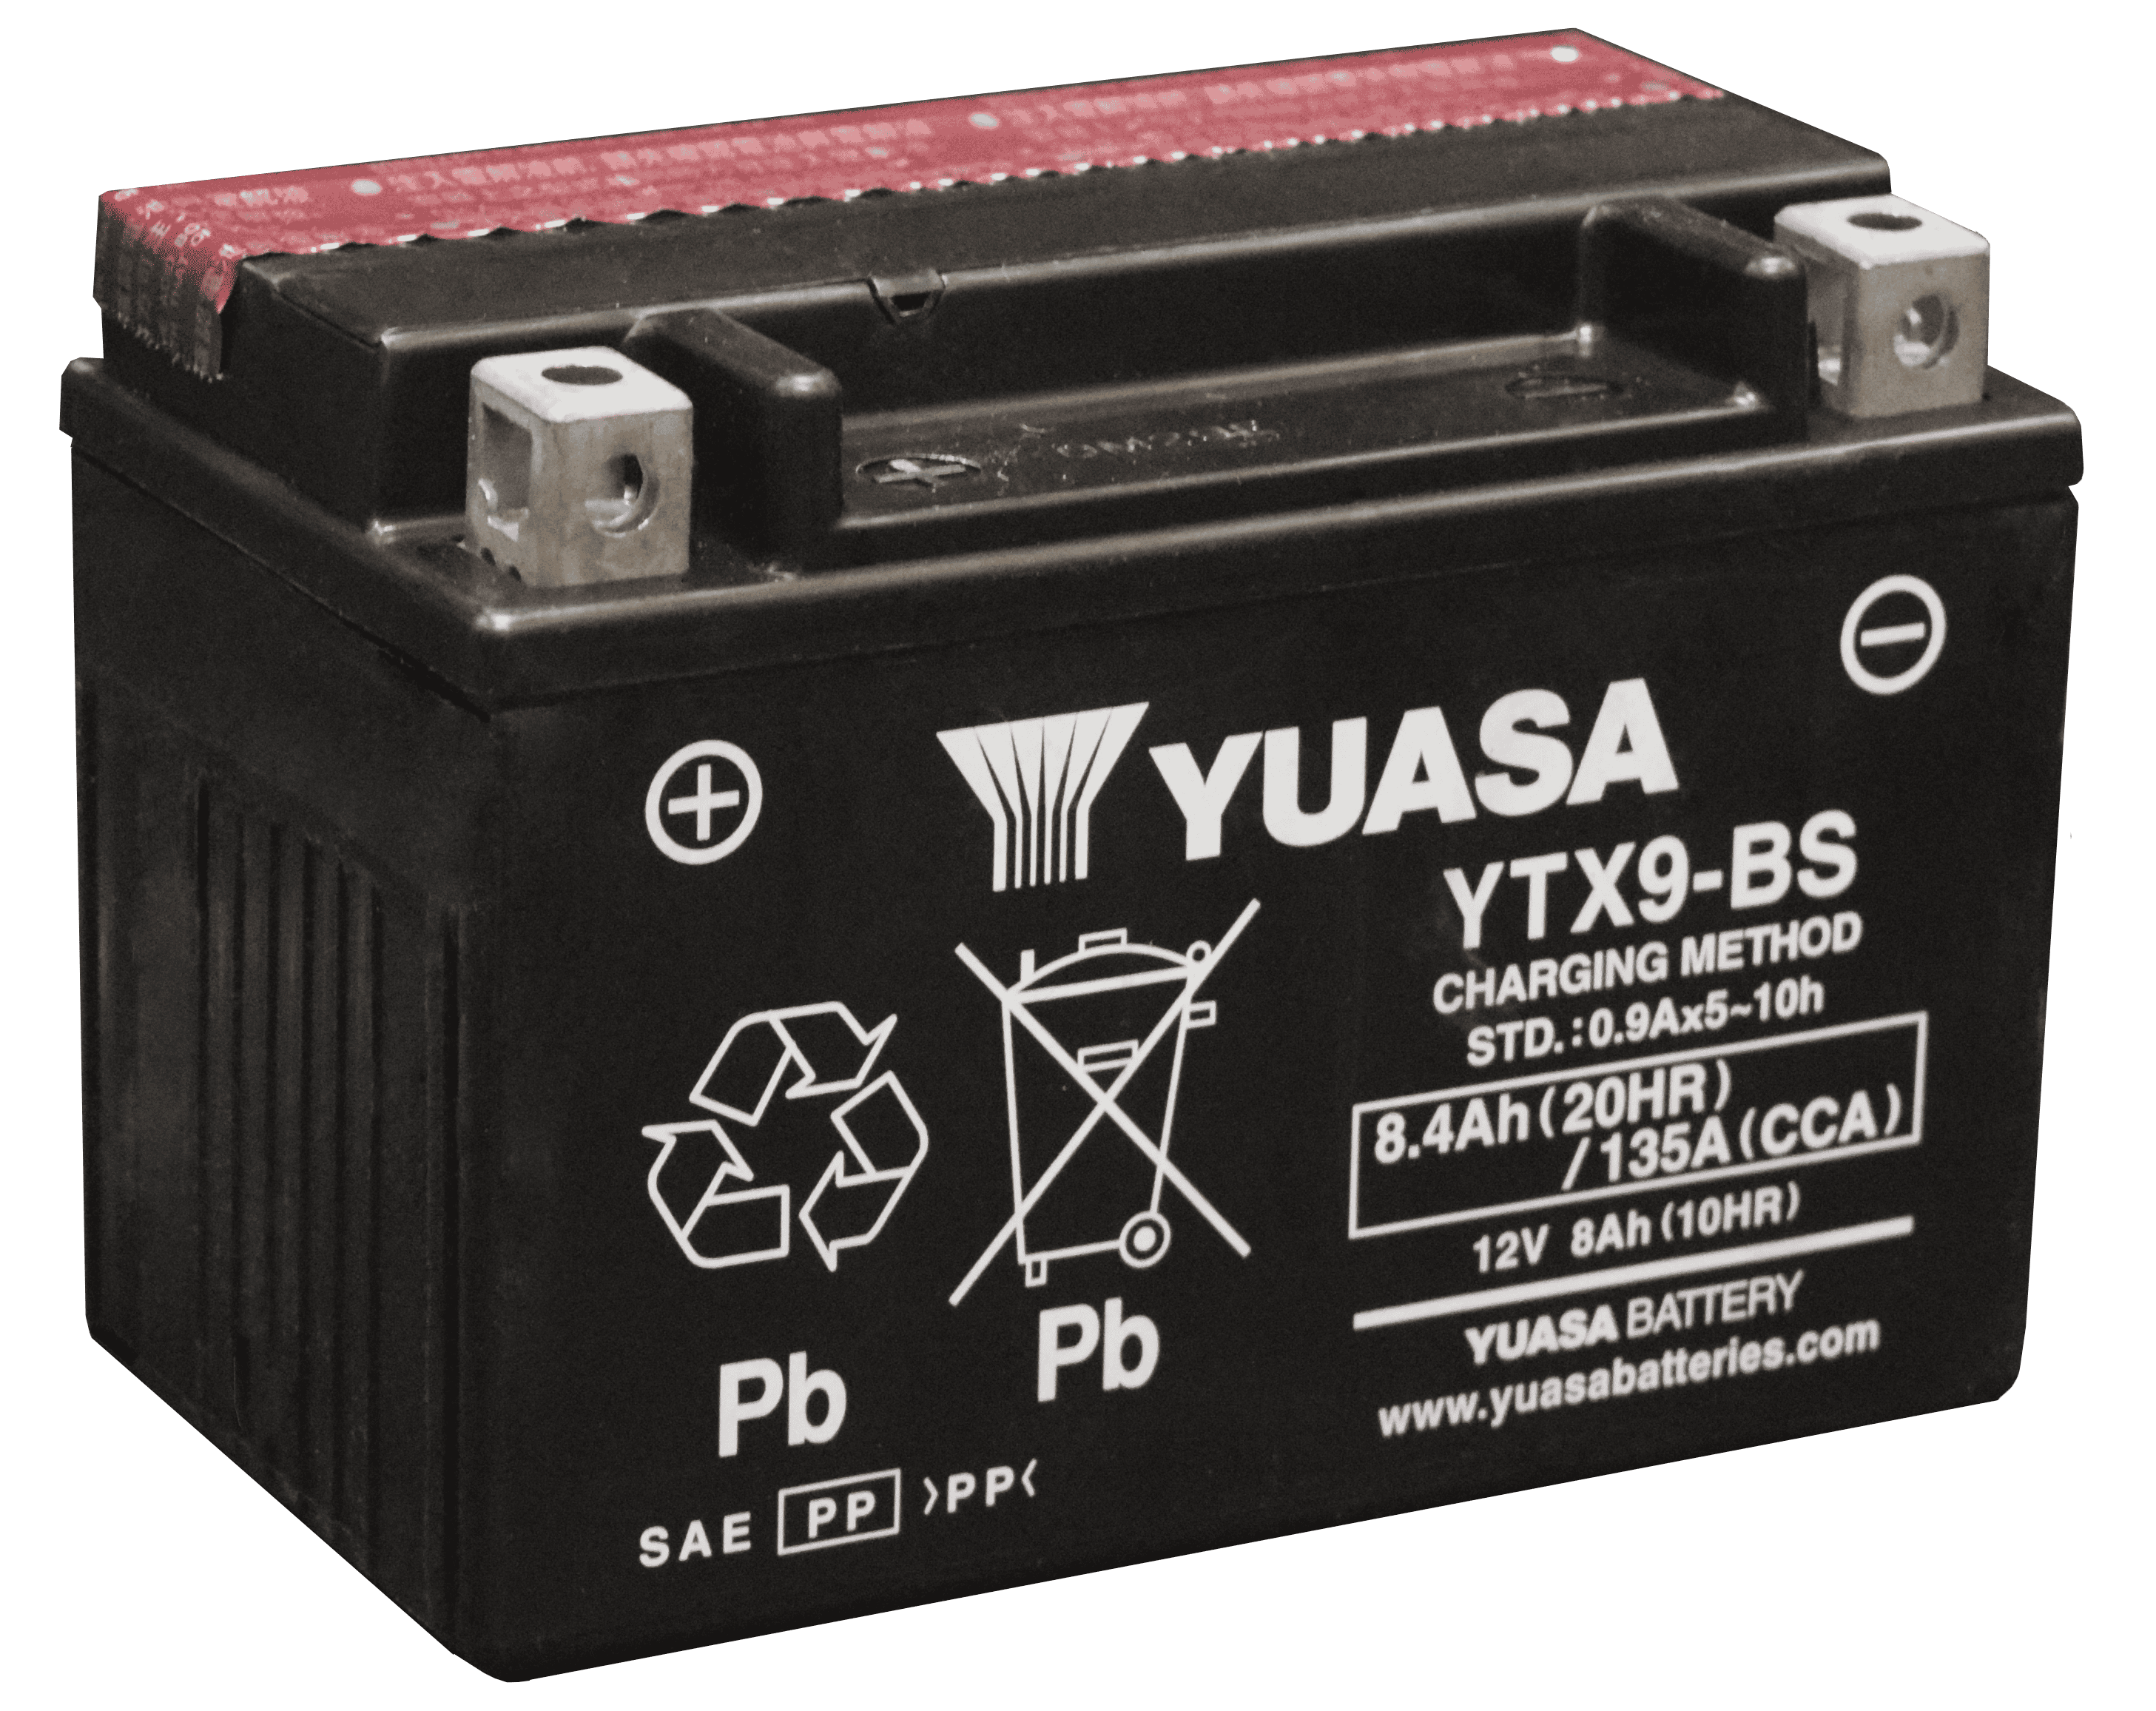 Bateria YTX9-BS Power Thunder